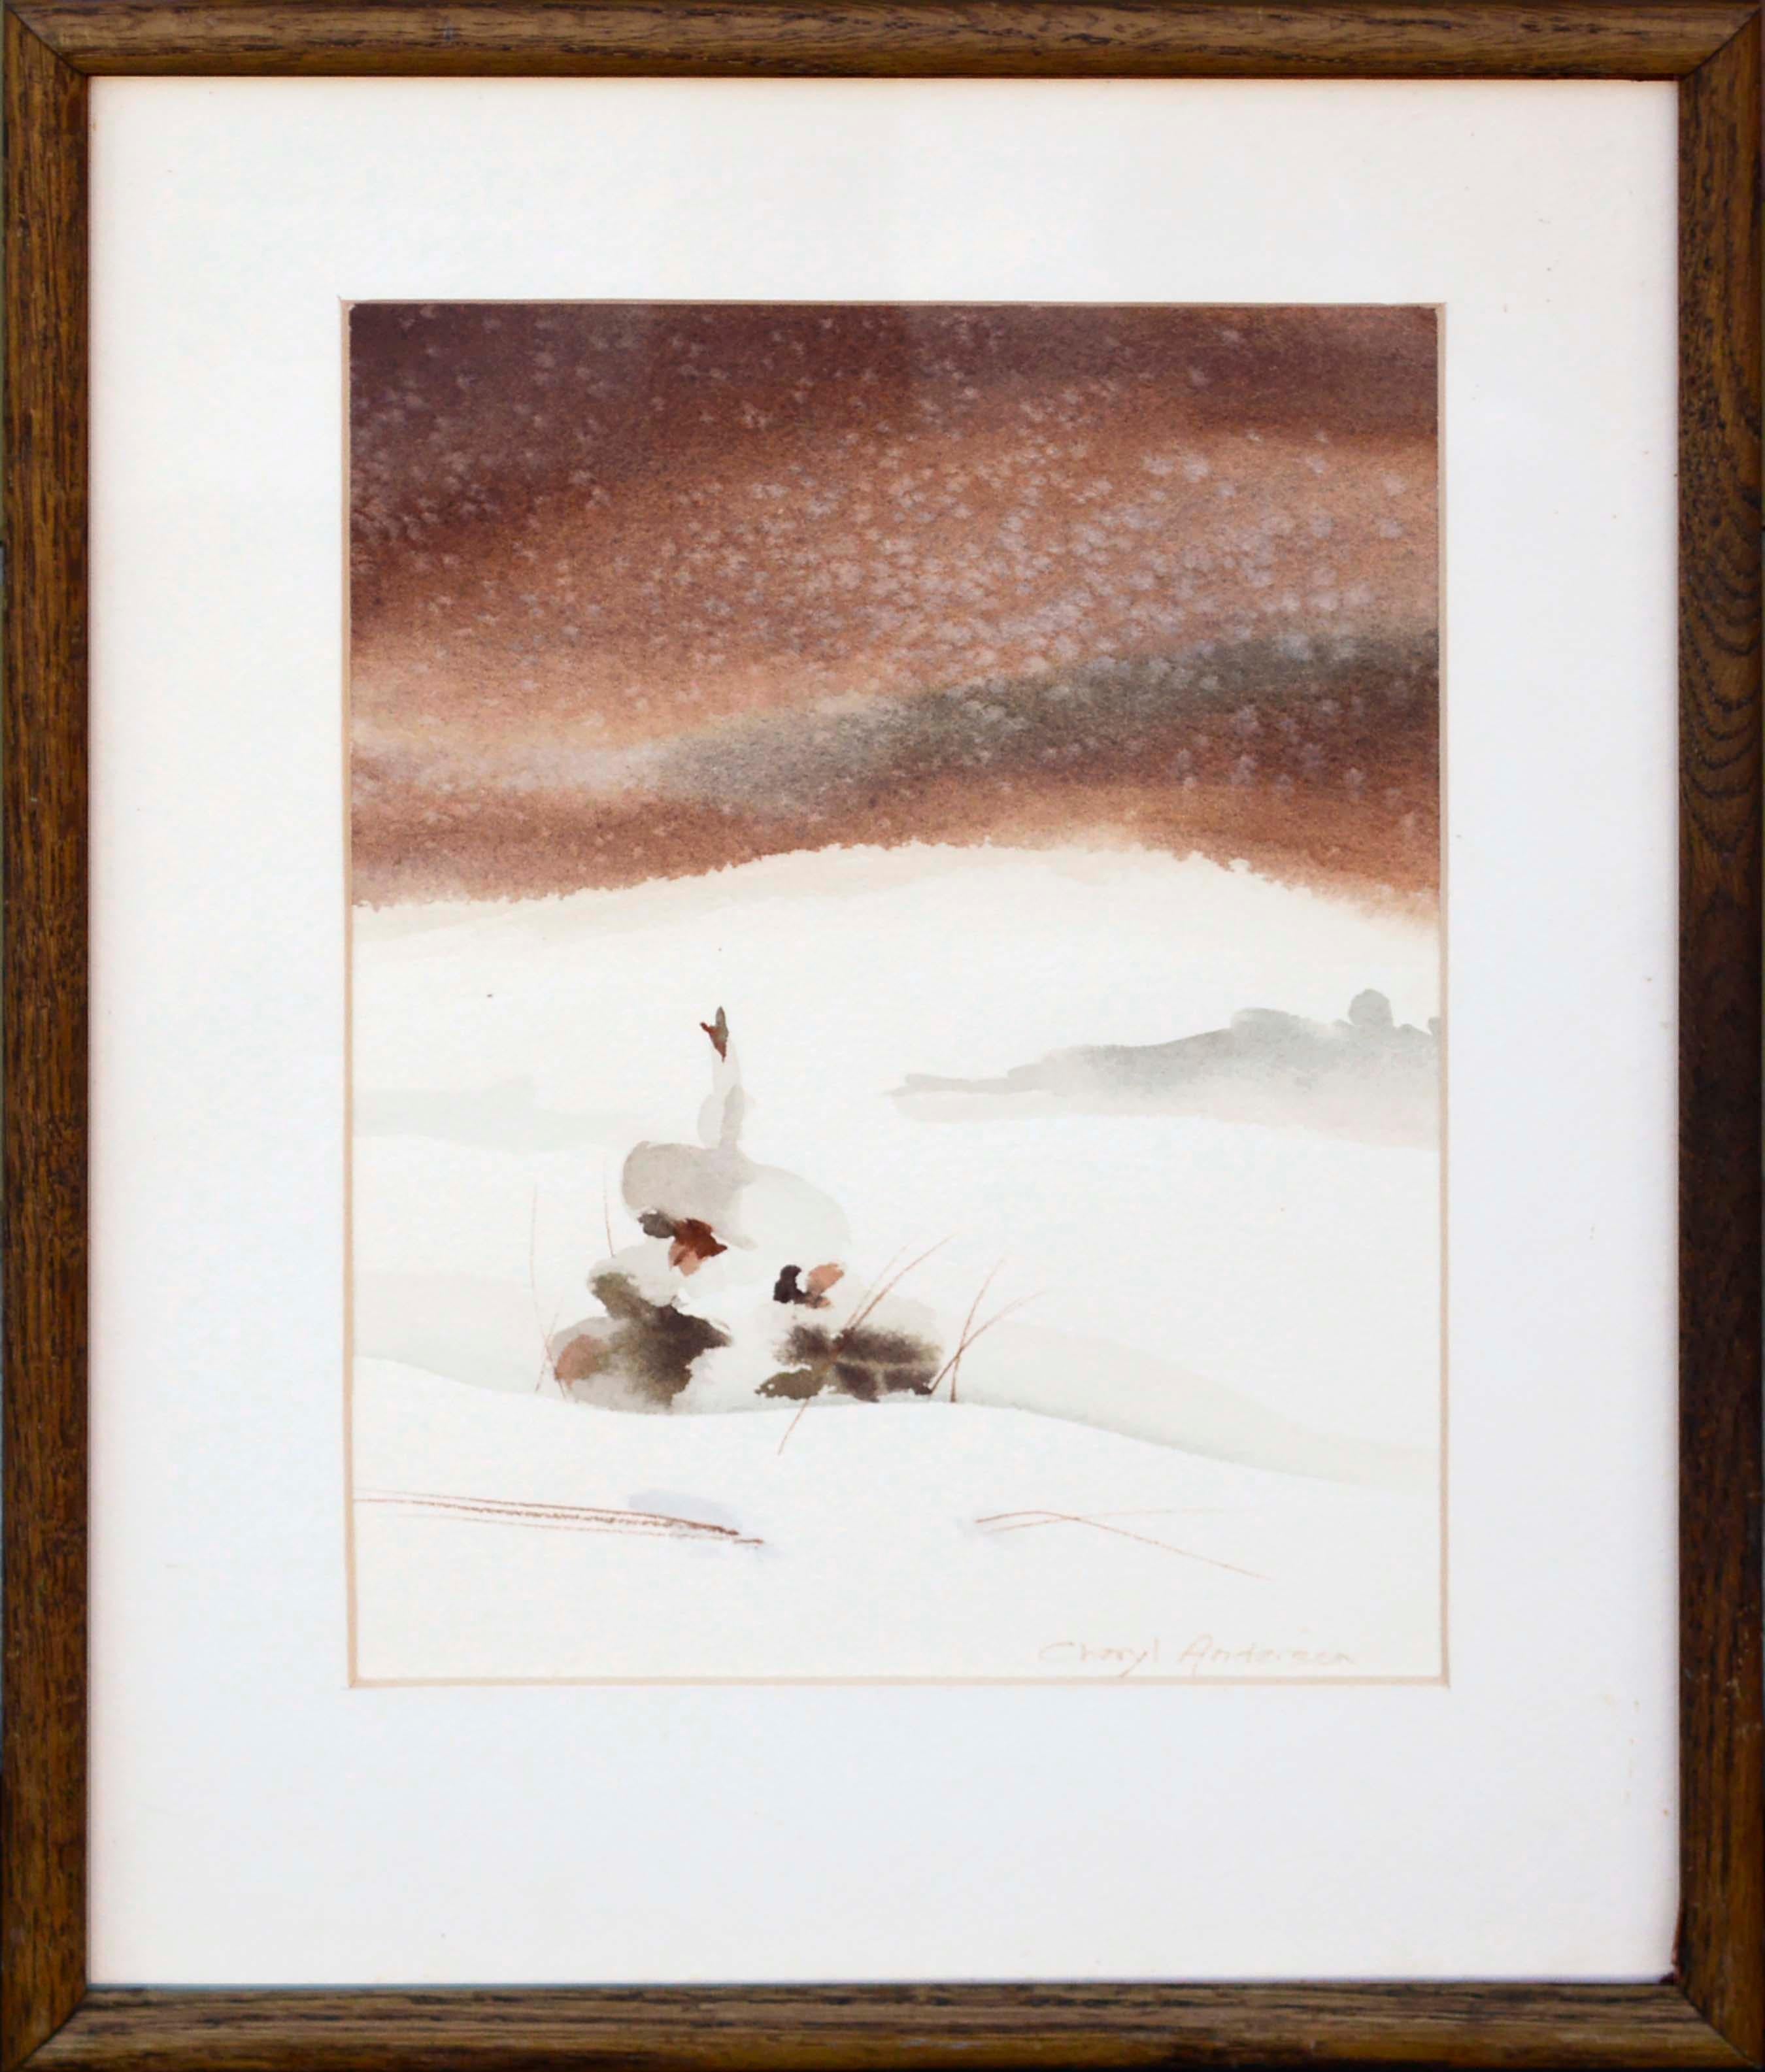 Snowy Pine - Minimal Winter Landscape  - Art by Cheryl Anderson